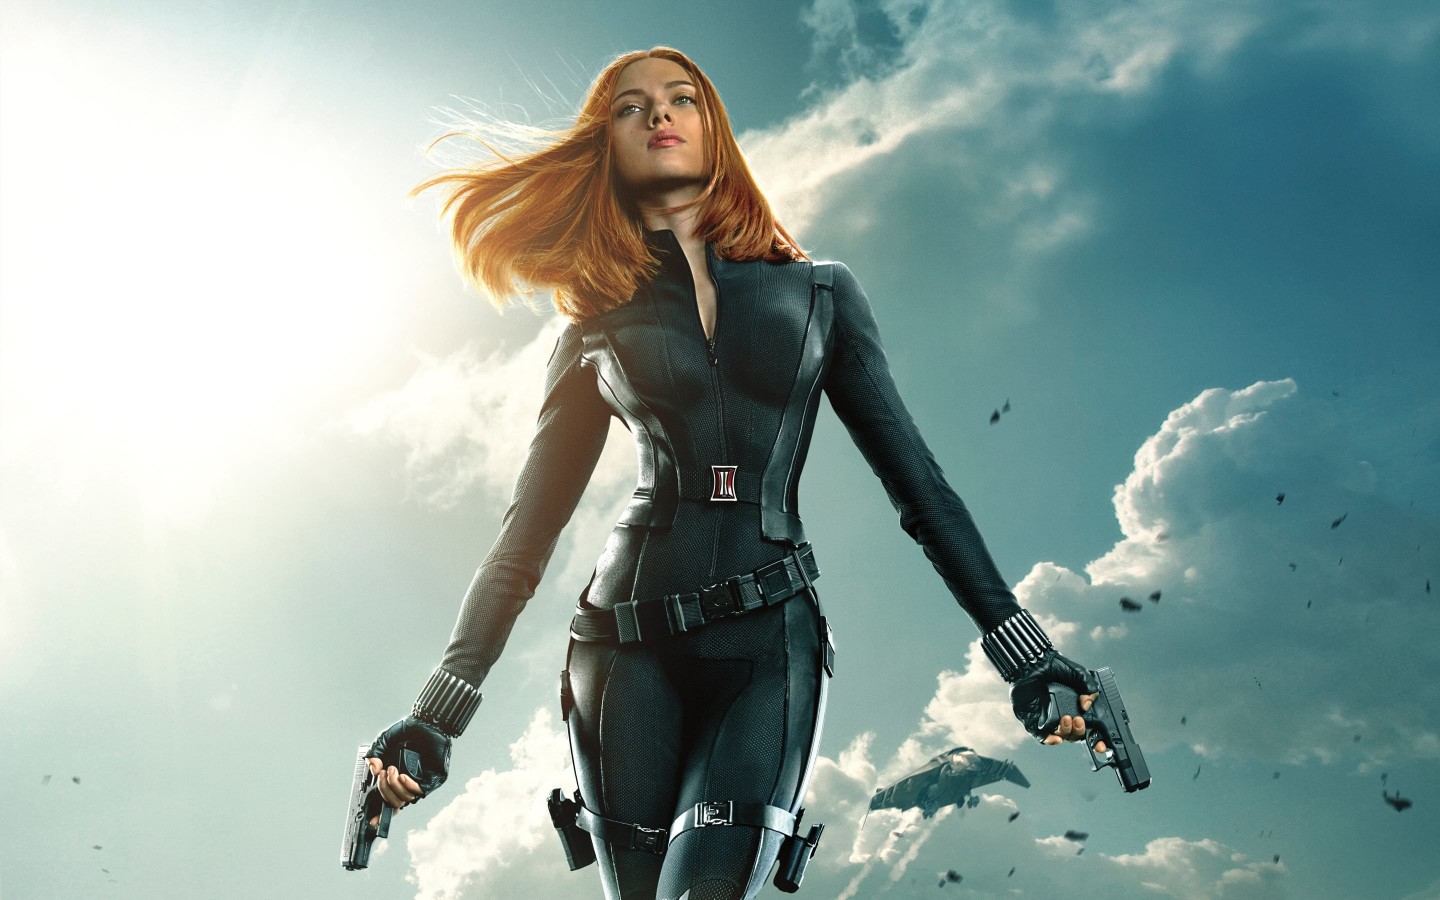 Scarlett Johansson in "Captain America: The Winter Soldier" Wallpaper for Desktop 1440x900